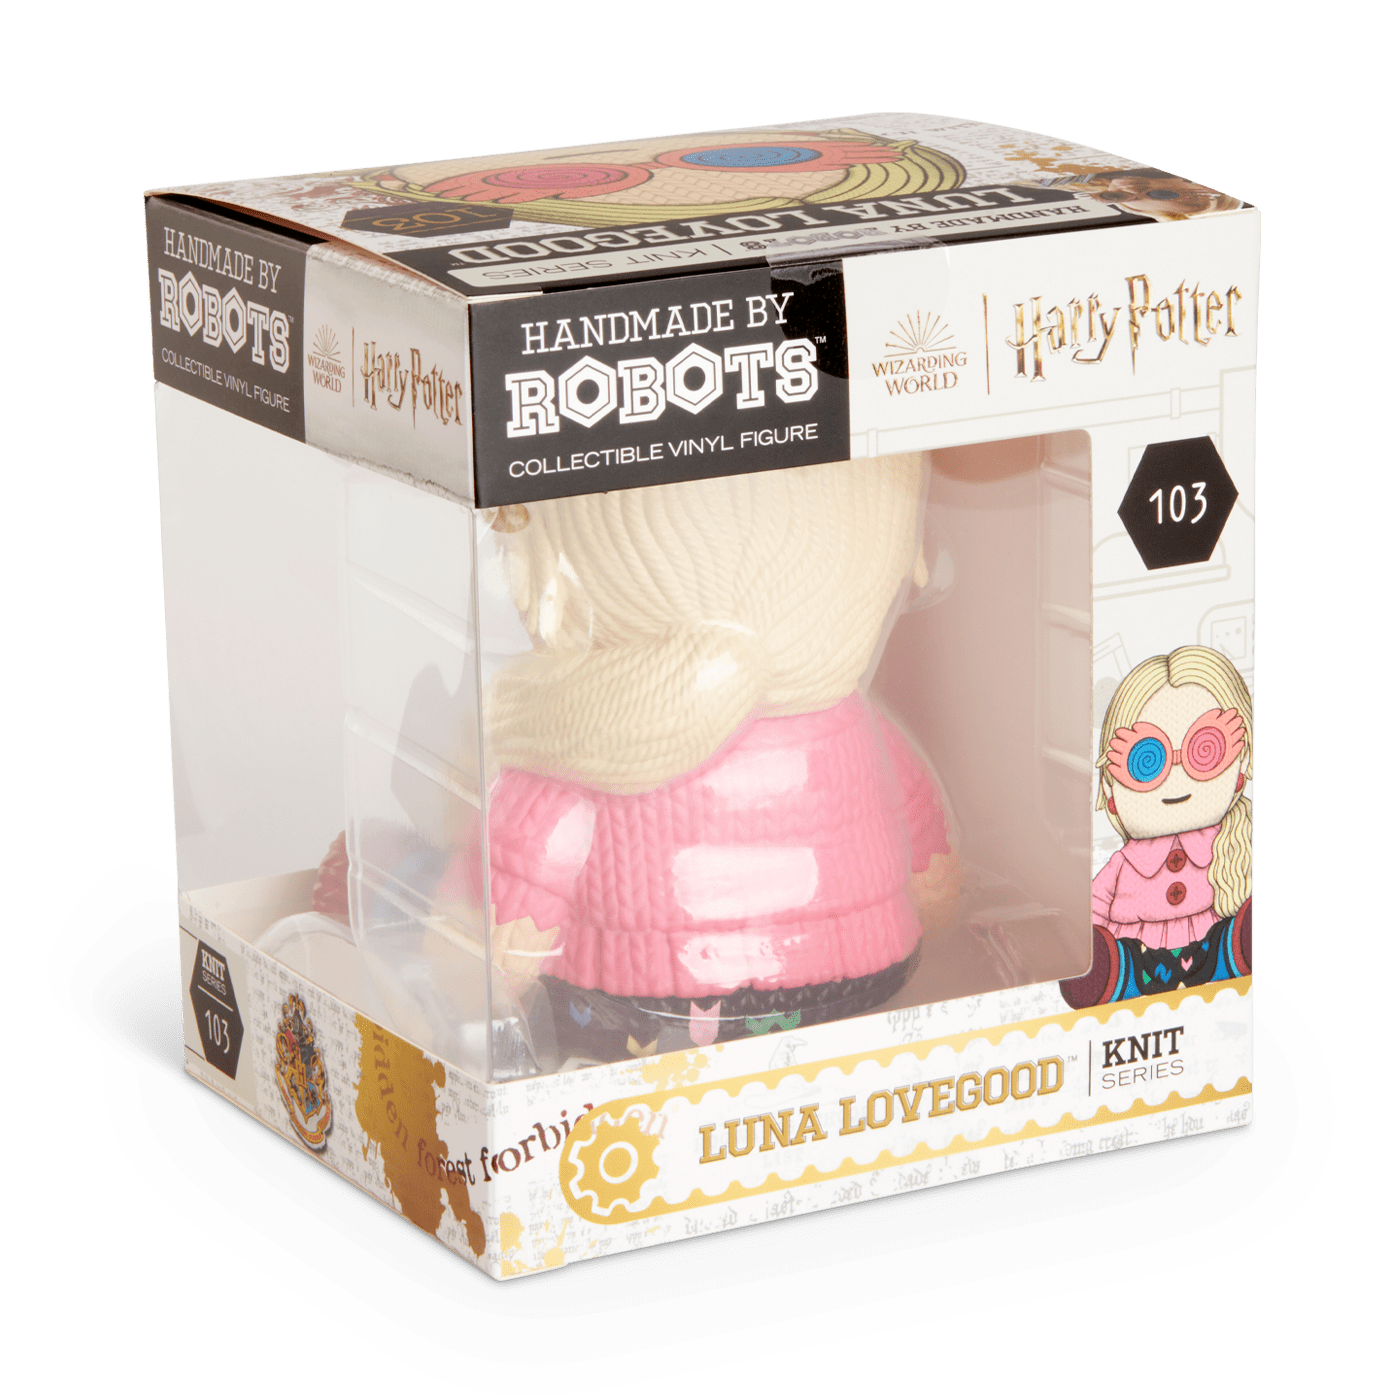 Luna Lovegood #103 - Harry Potter - Handmade by Robots - Limited Edition